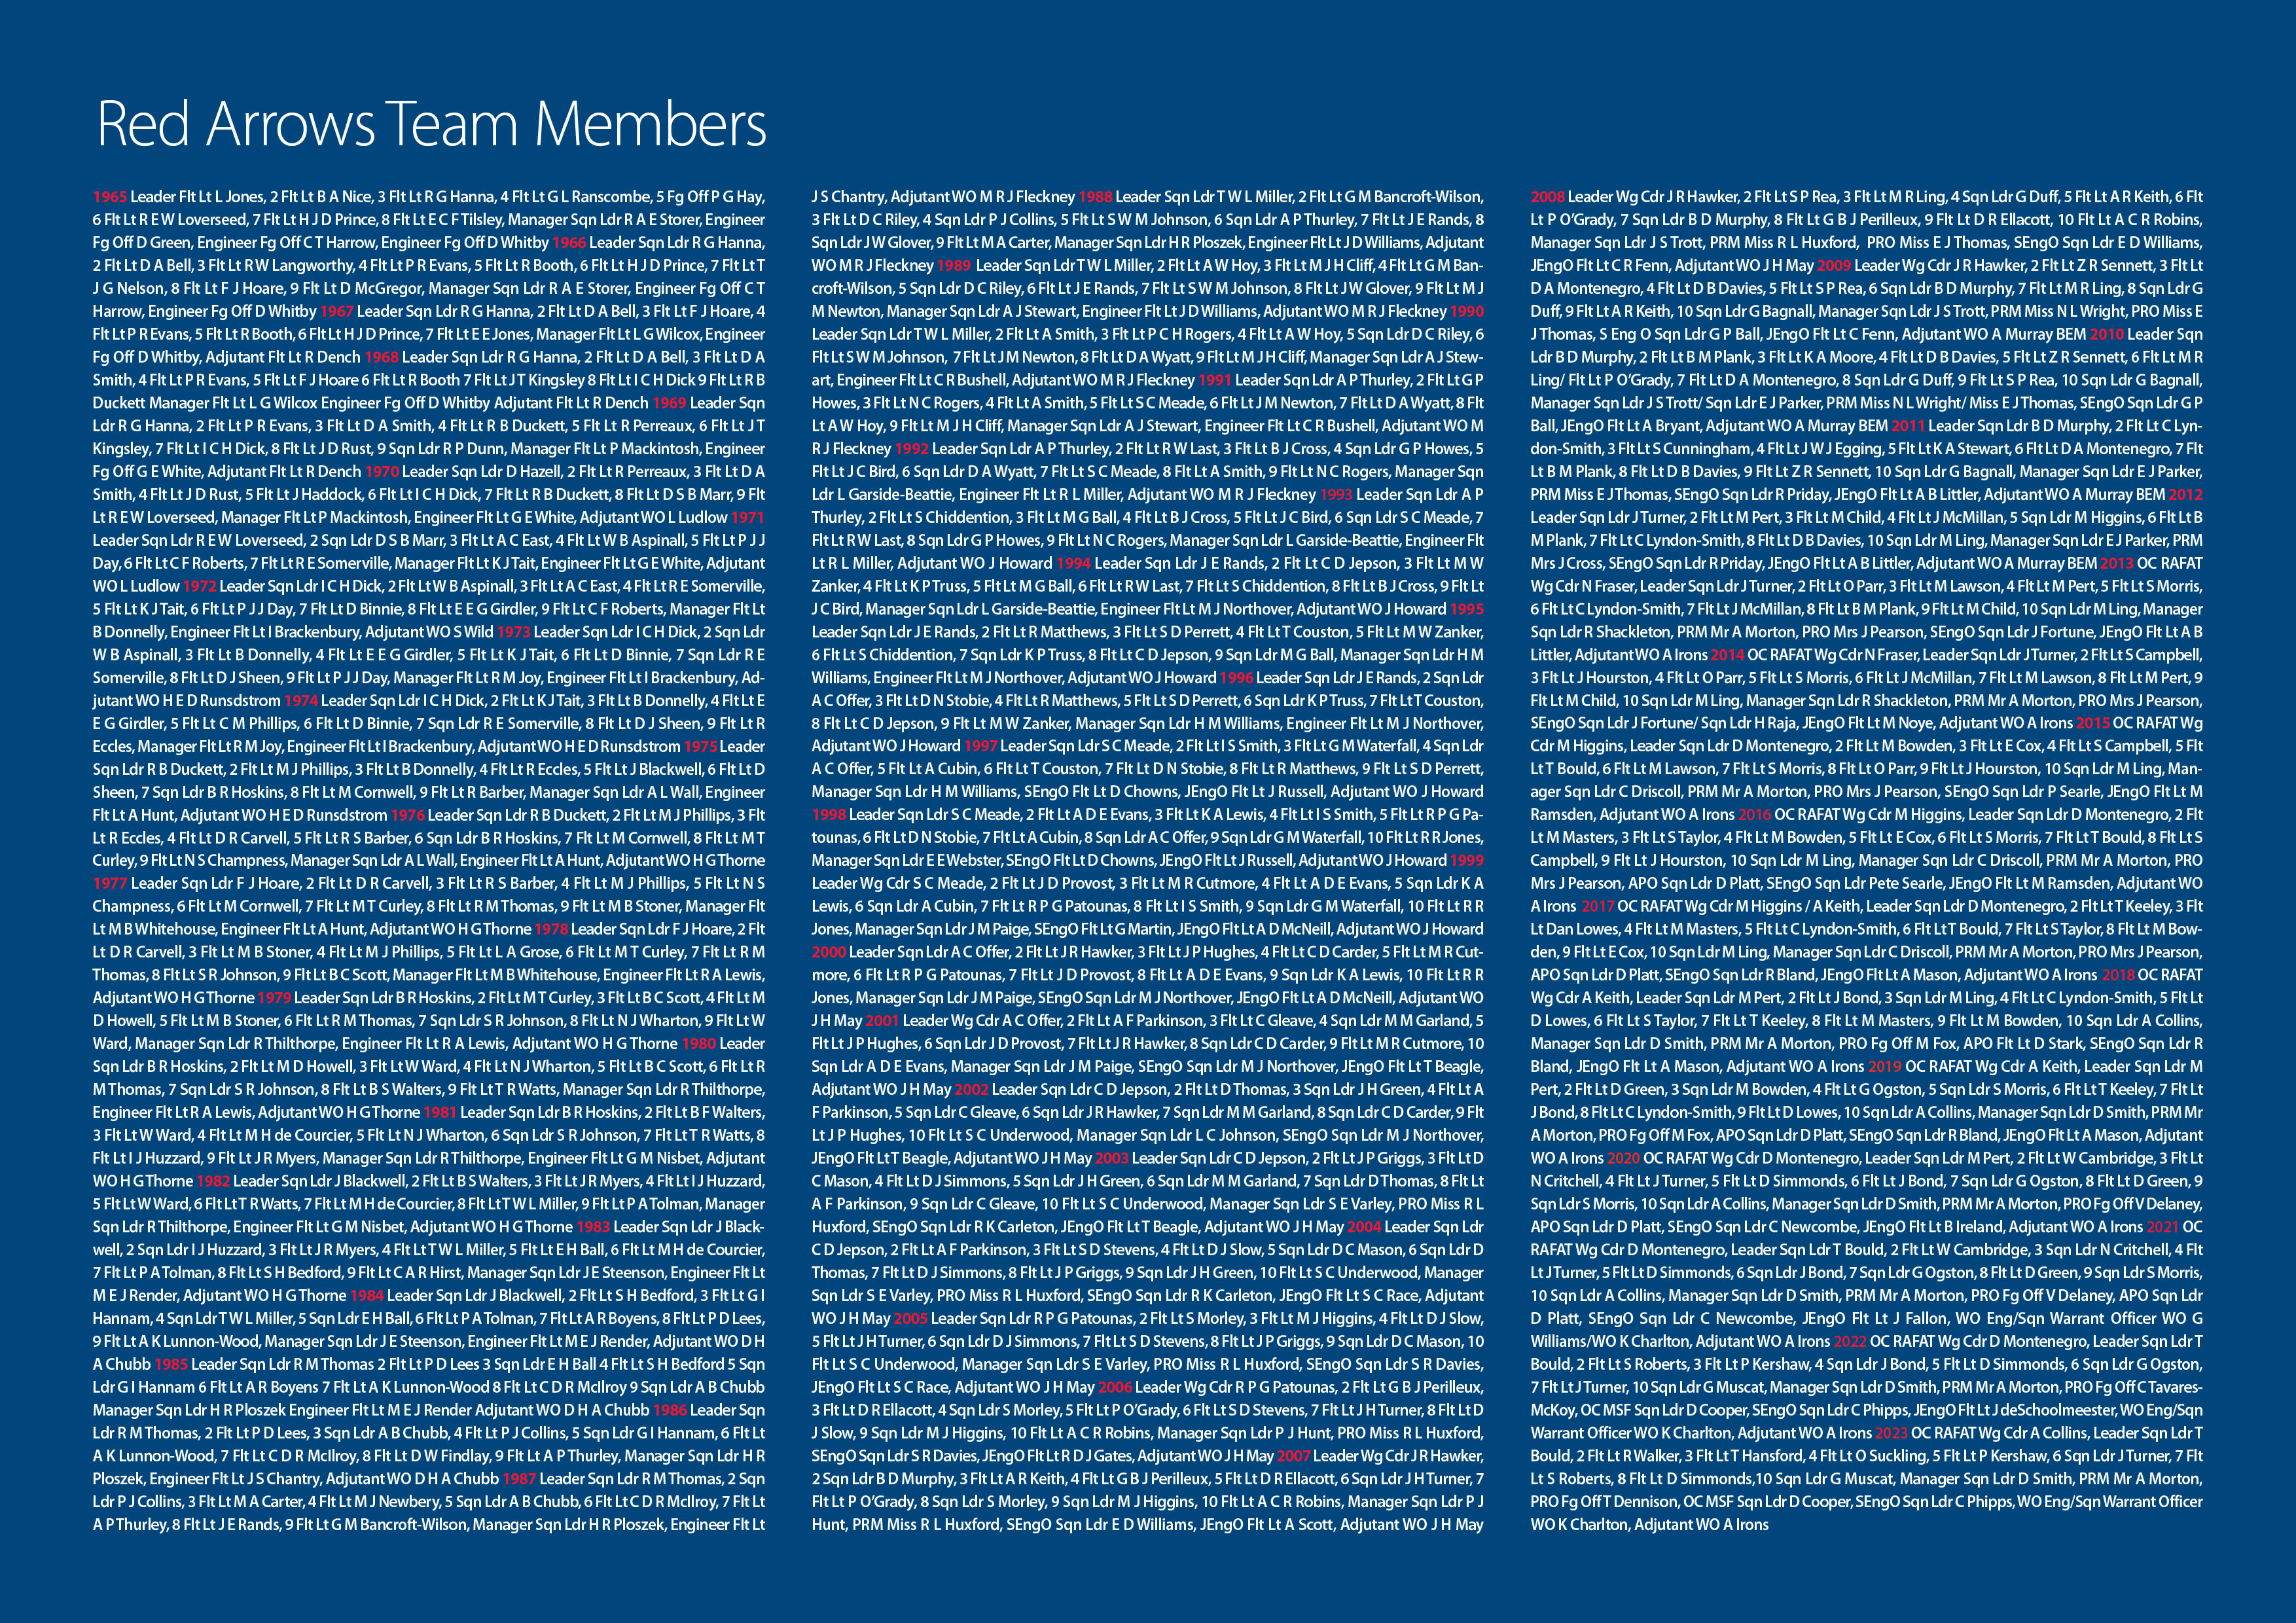 A list of team members since 1965.